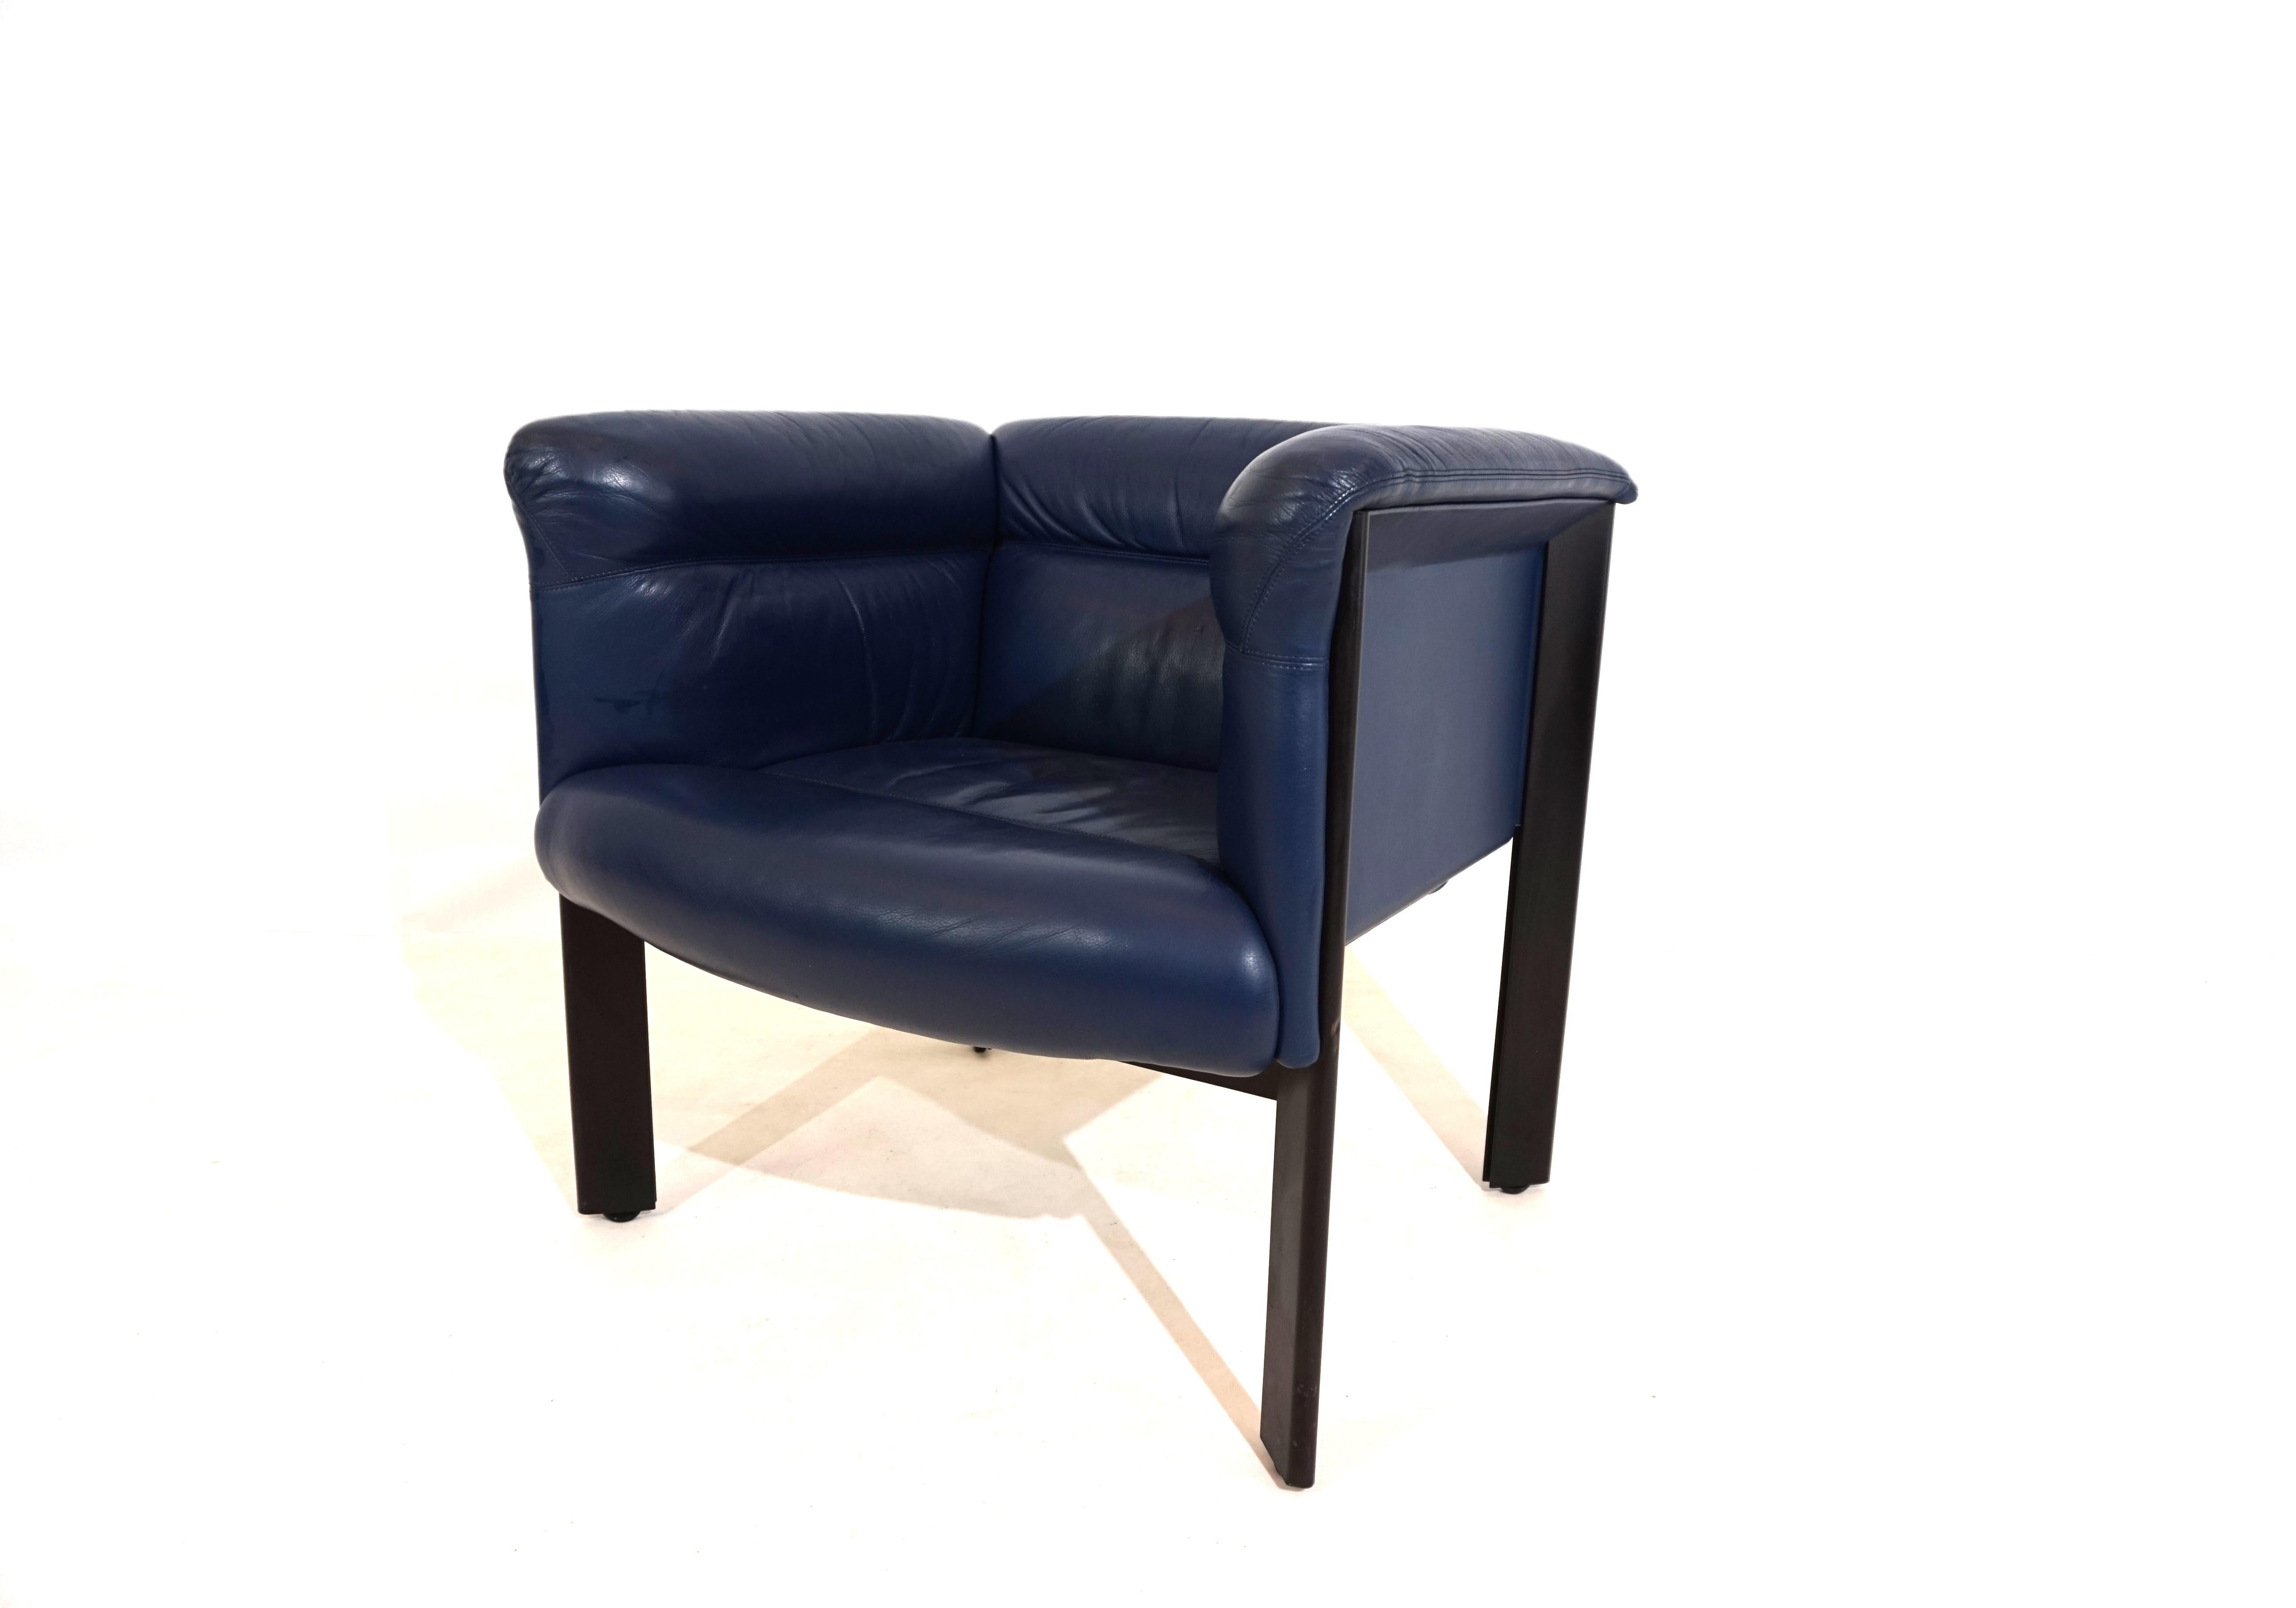 Poltrona Frau Interlude leather armchair by Marco Zanuso For Sale 2